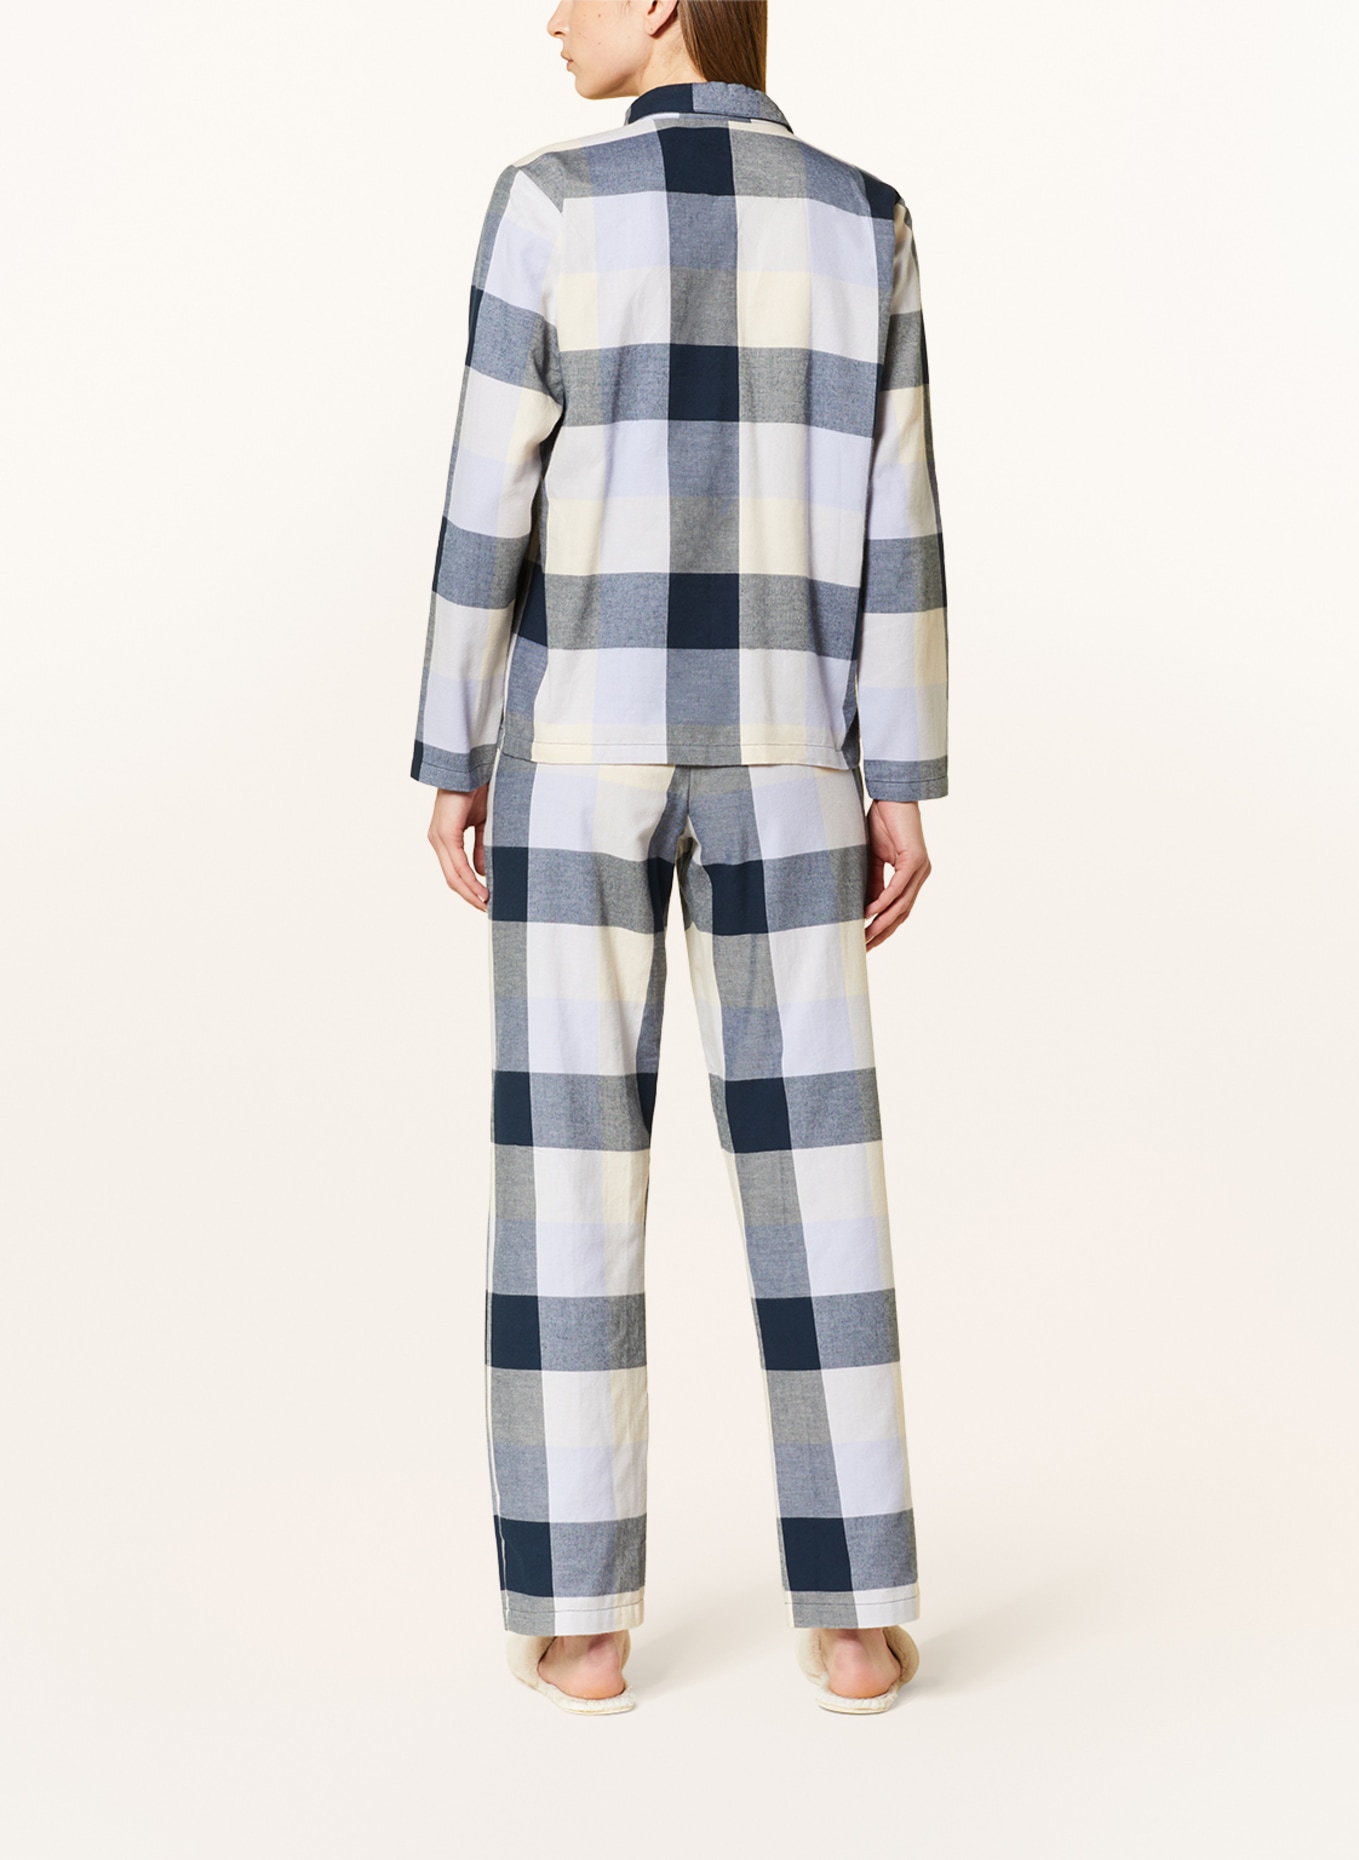 SCHIESSER Pajamas SELECTED! PREMIUM in flannel, Color: DARK BLUE/ GRAY/ ECRU (Image 3)